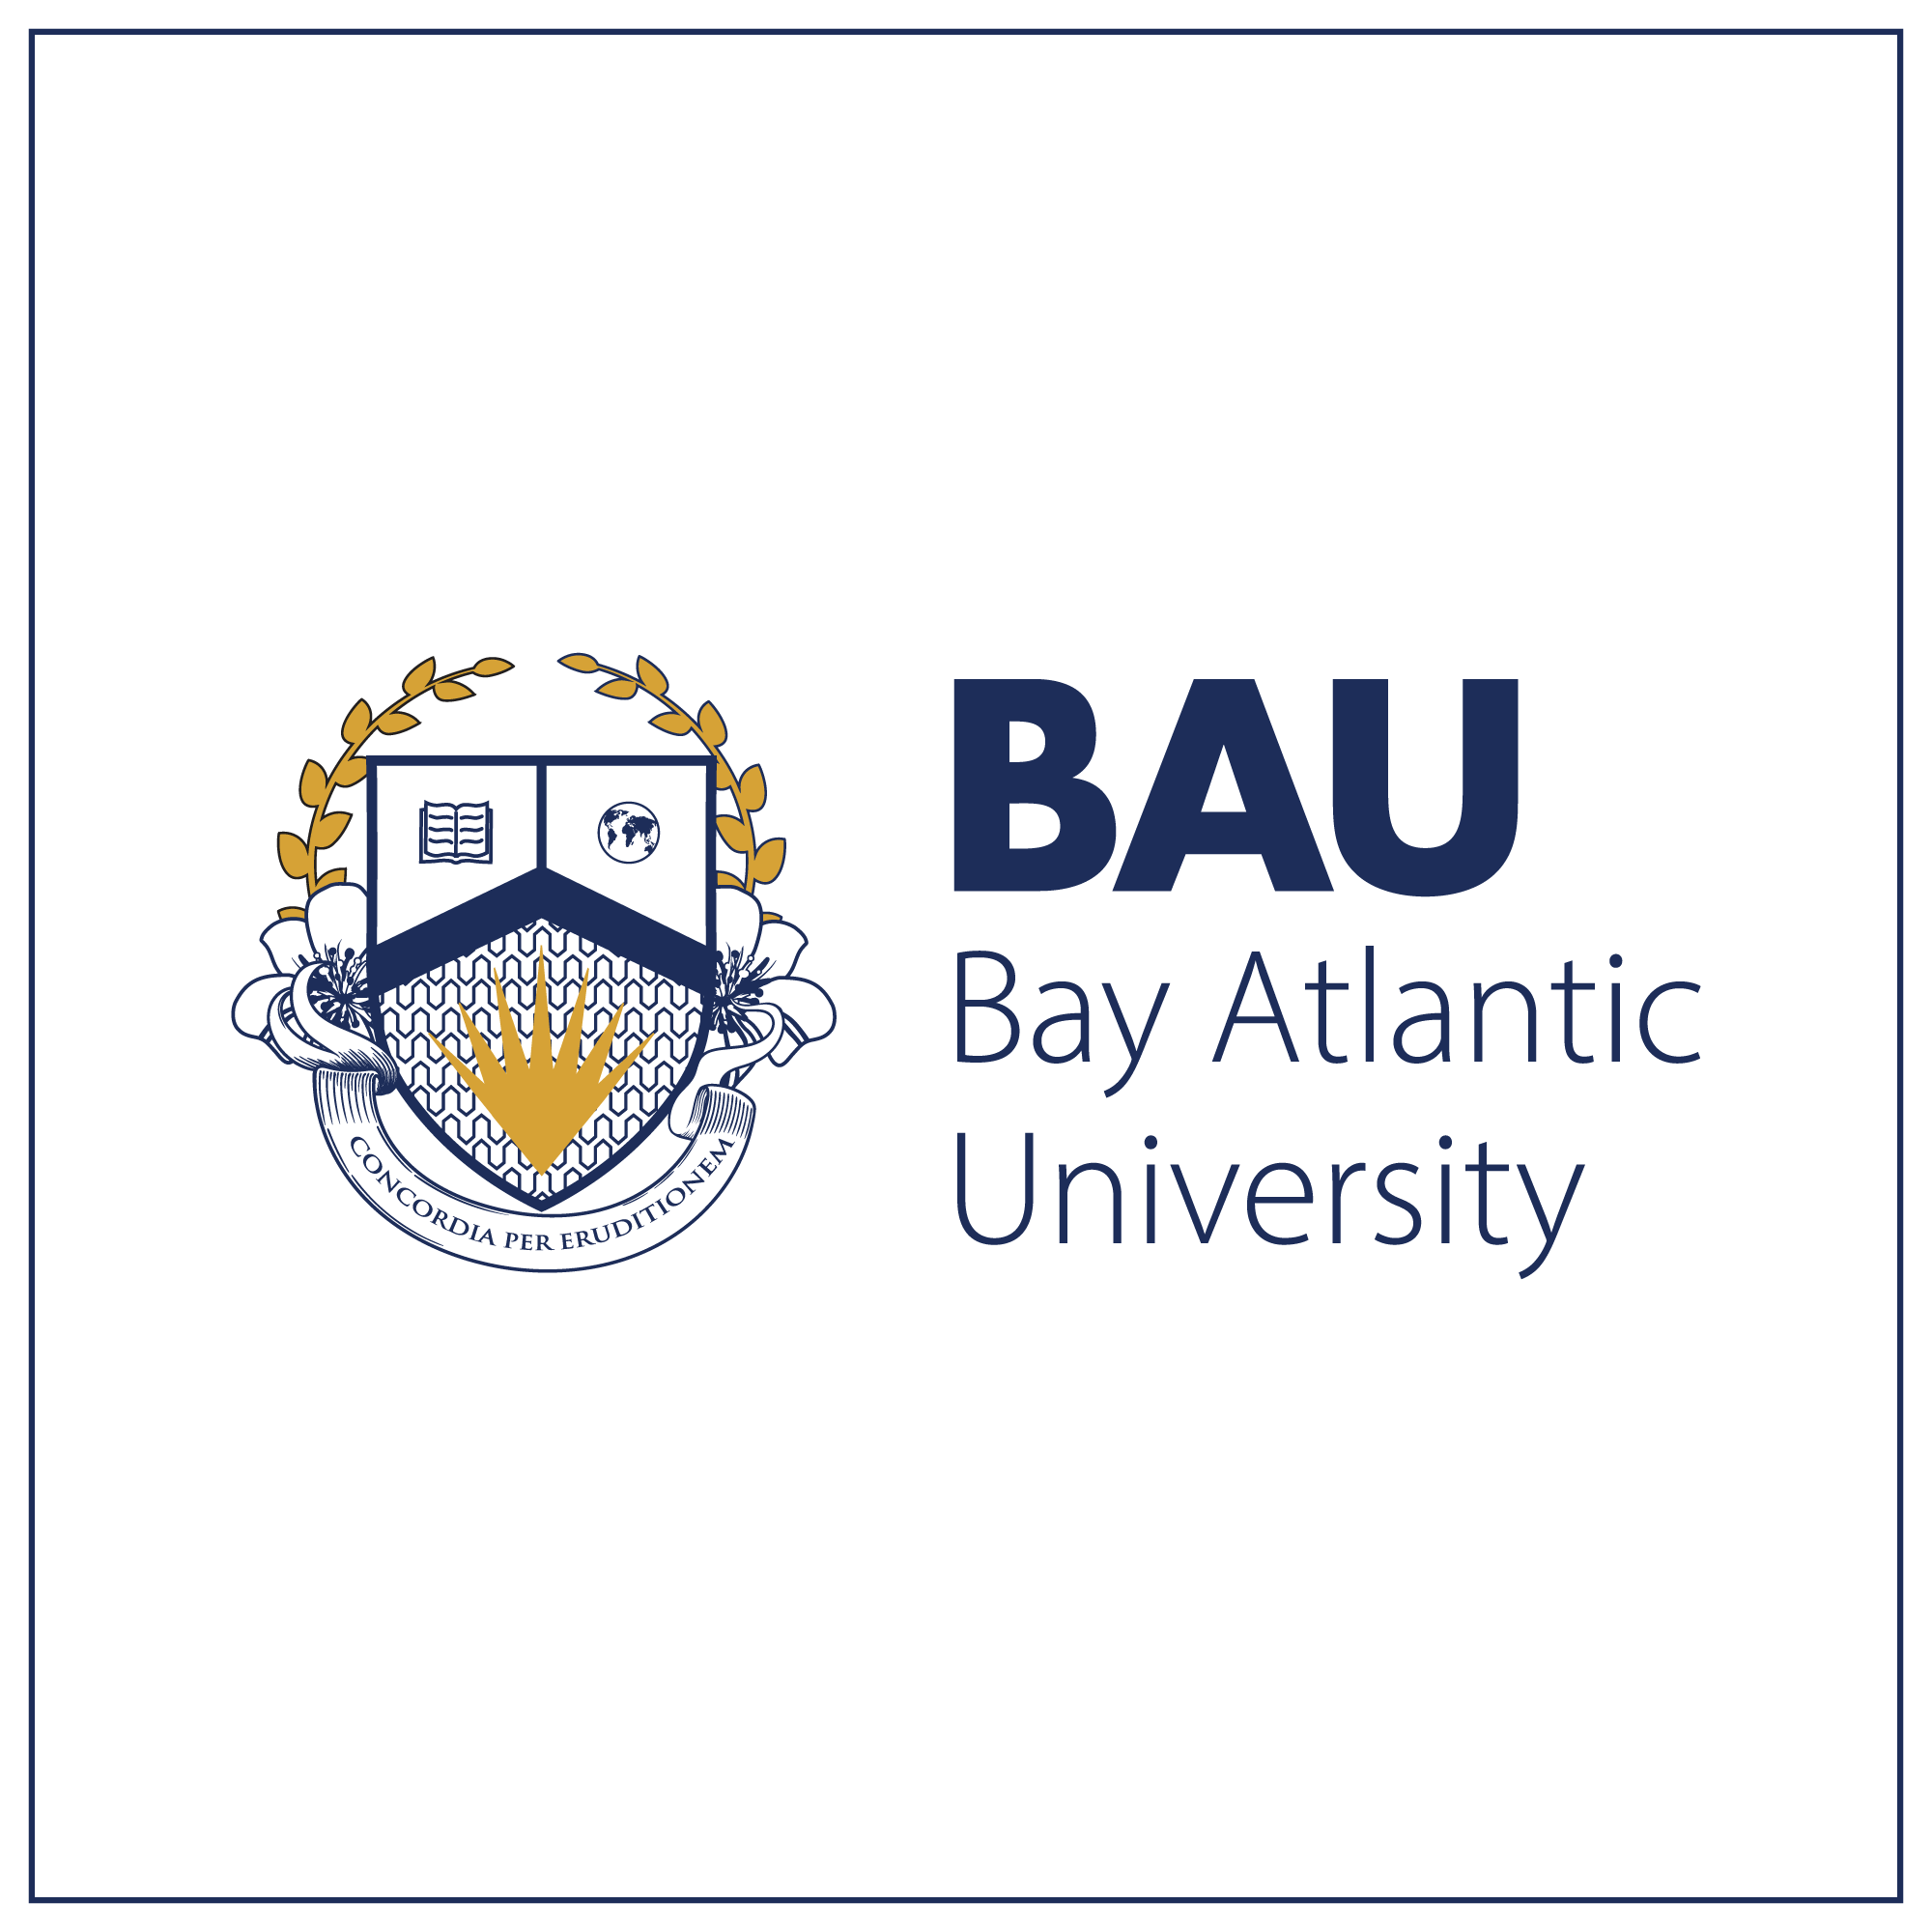 Acics Logo - Bay Atlantic University (BAU) Recovers Its Accreditation. Center